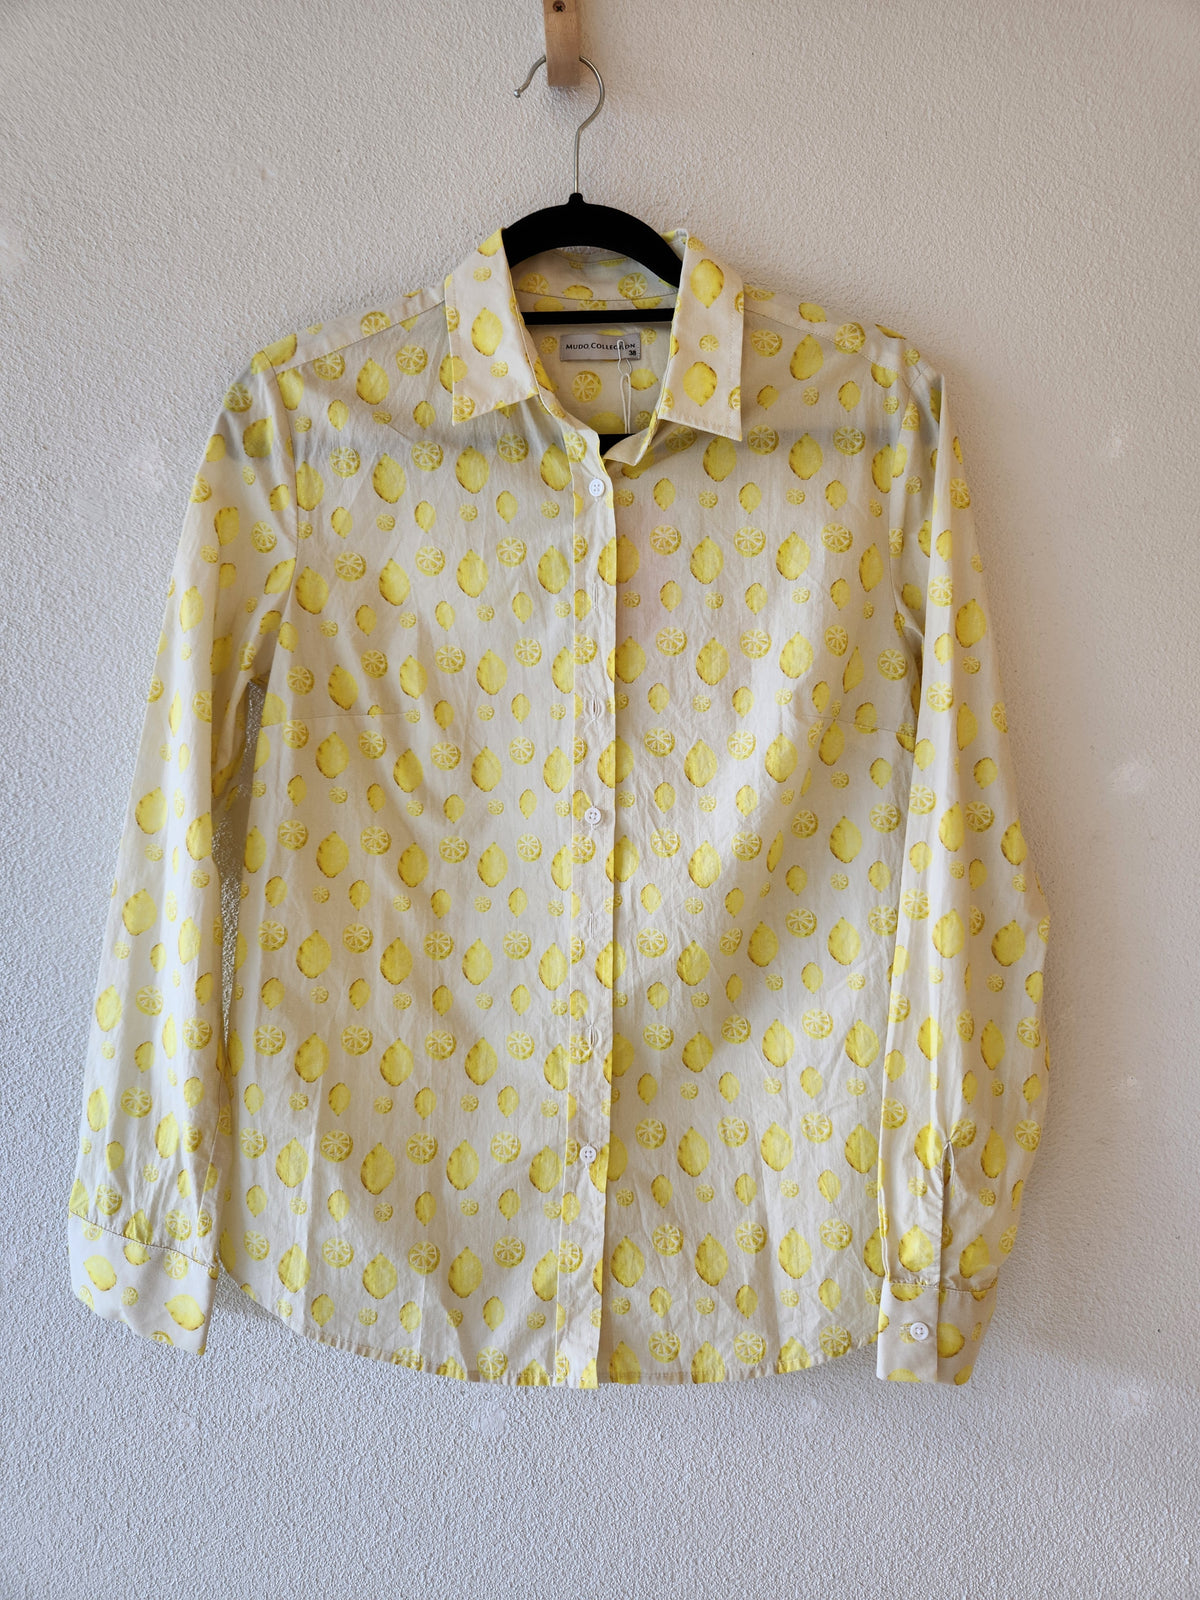 Mudo collection Lemon print cotton dress shirt Top M